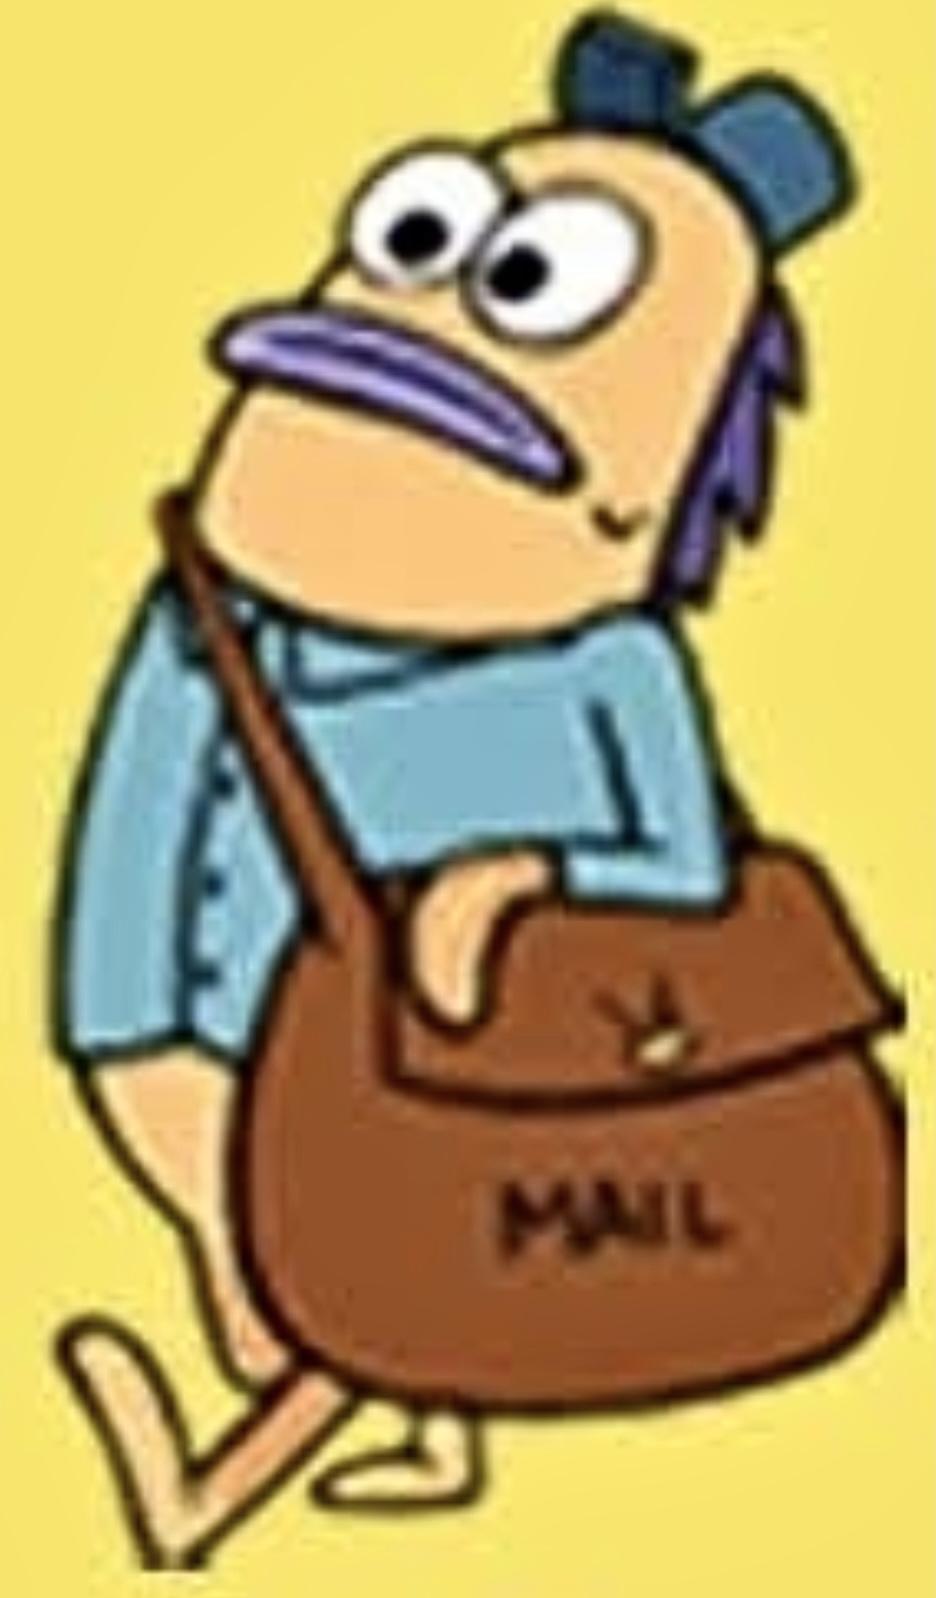 World of Mailman: World, I'm wearing pants